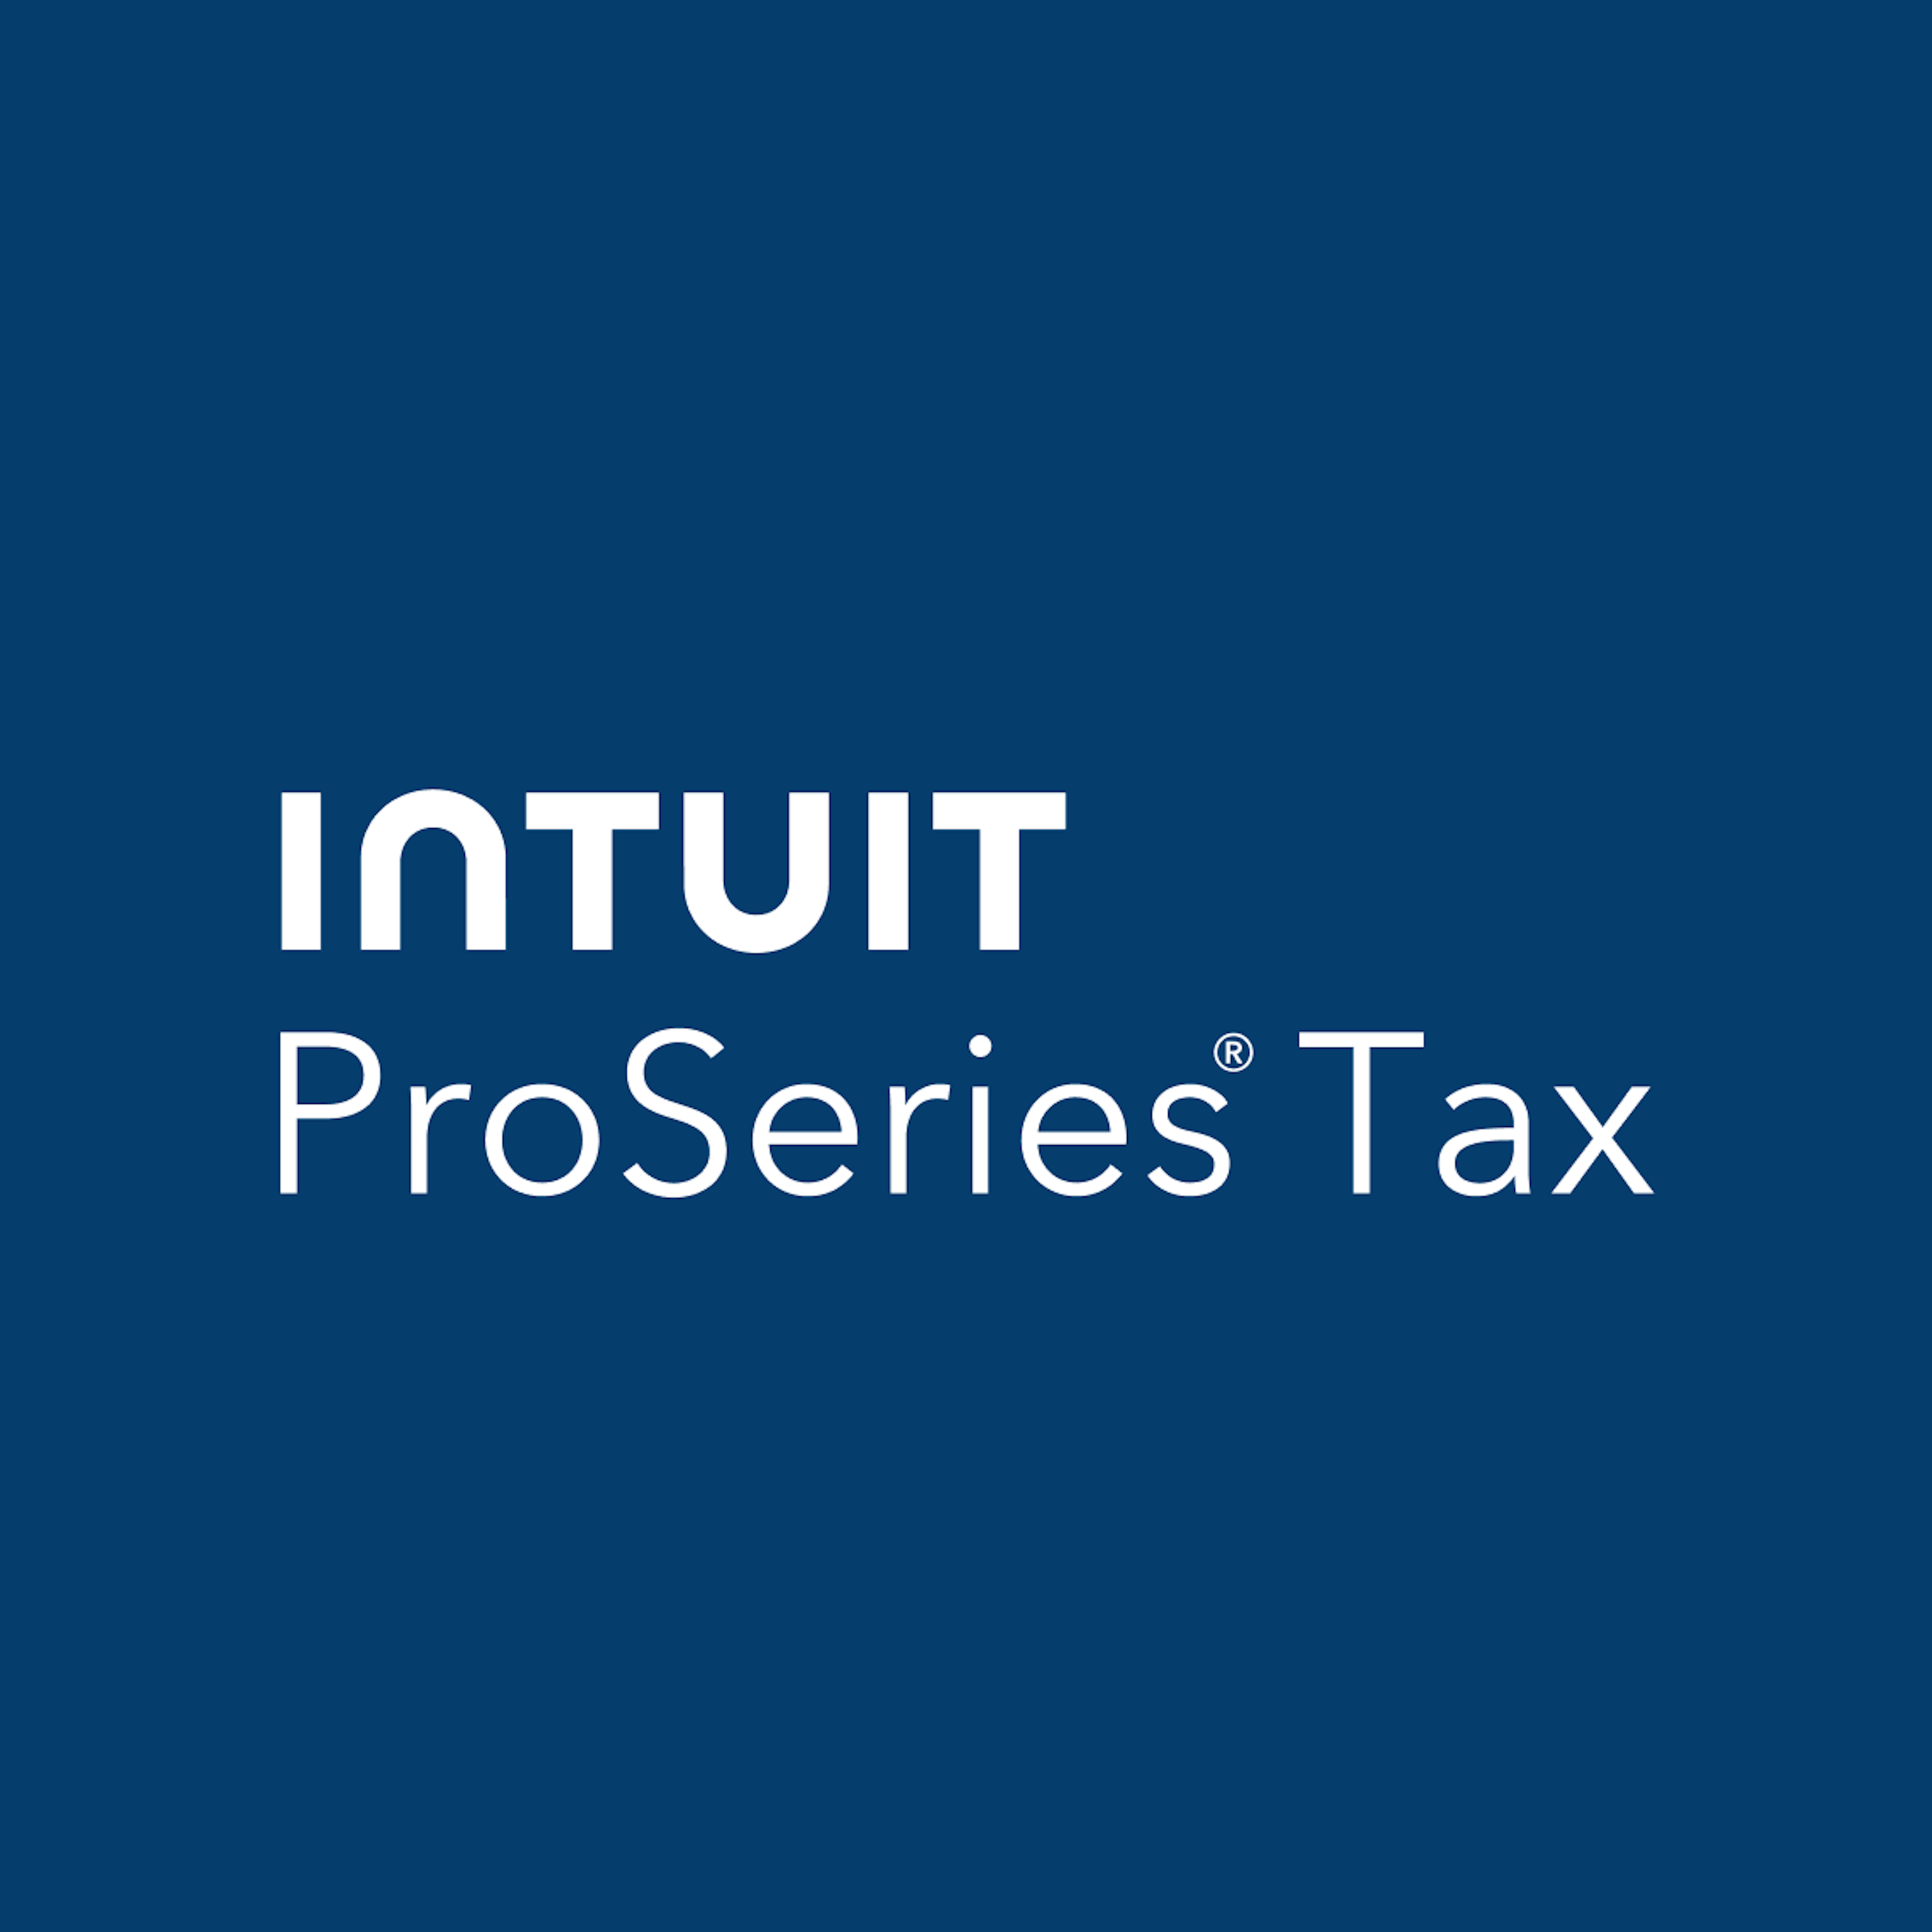 ProSeries Tax Logo